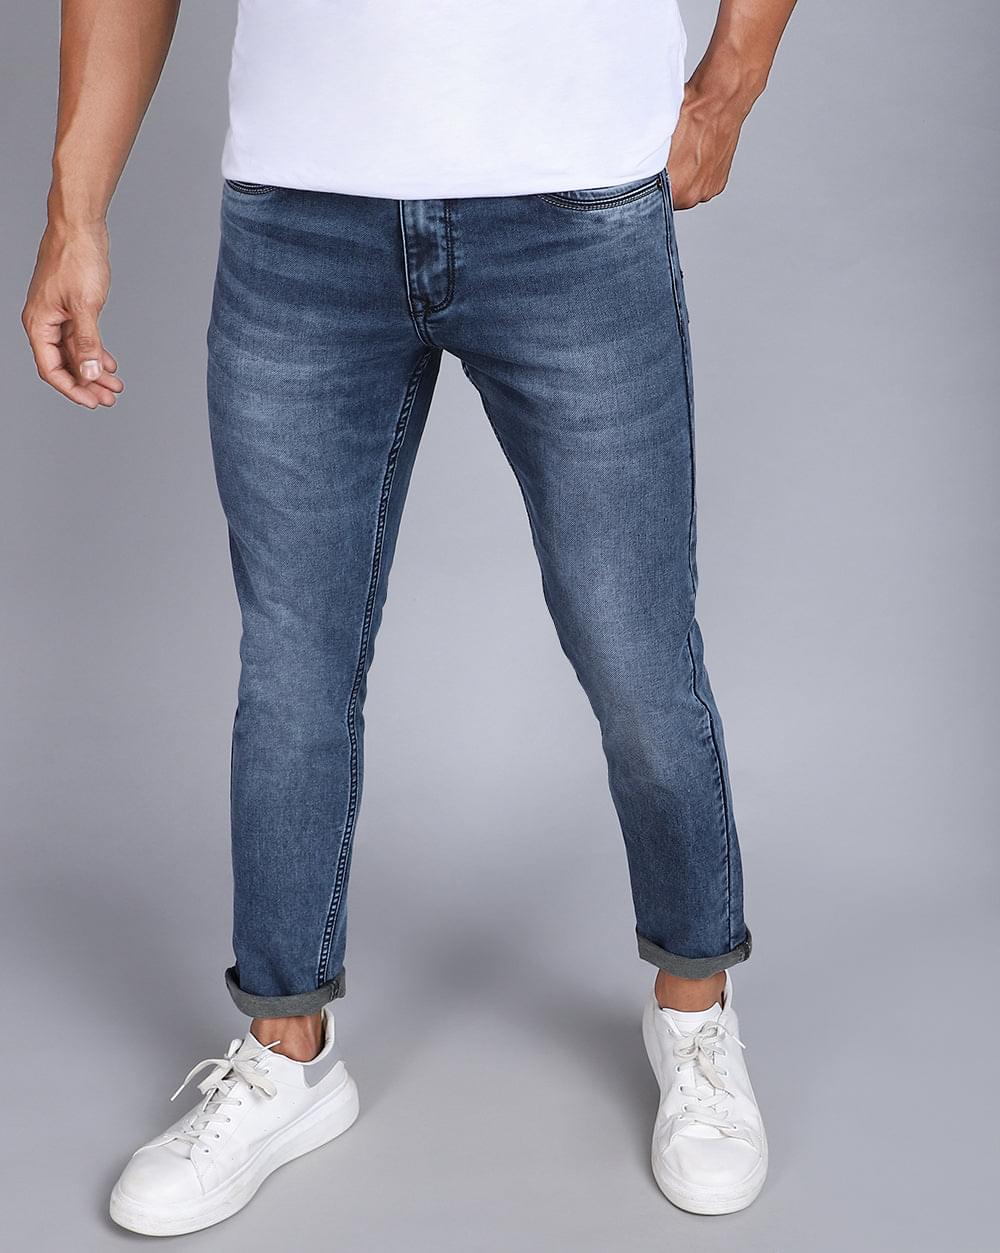 Ankle Fit Superior Blue Jeans for Men 